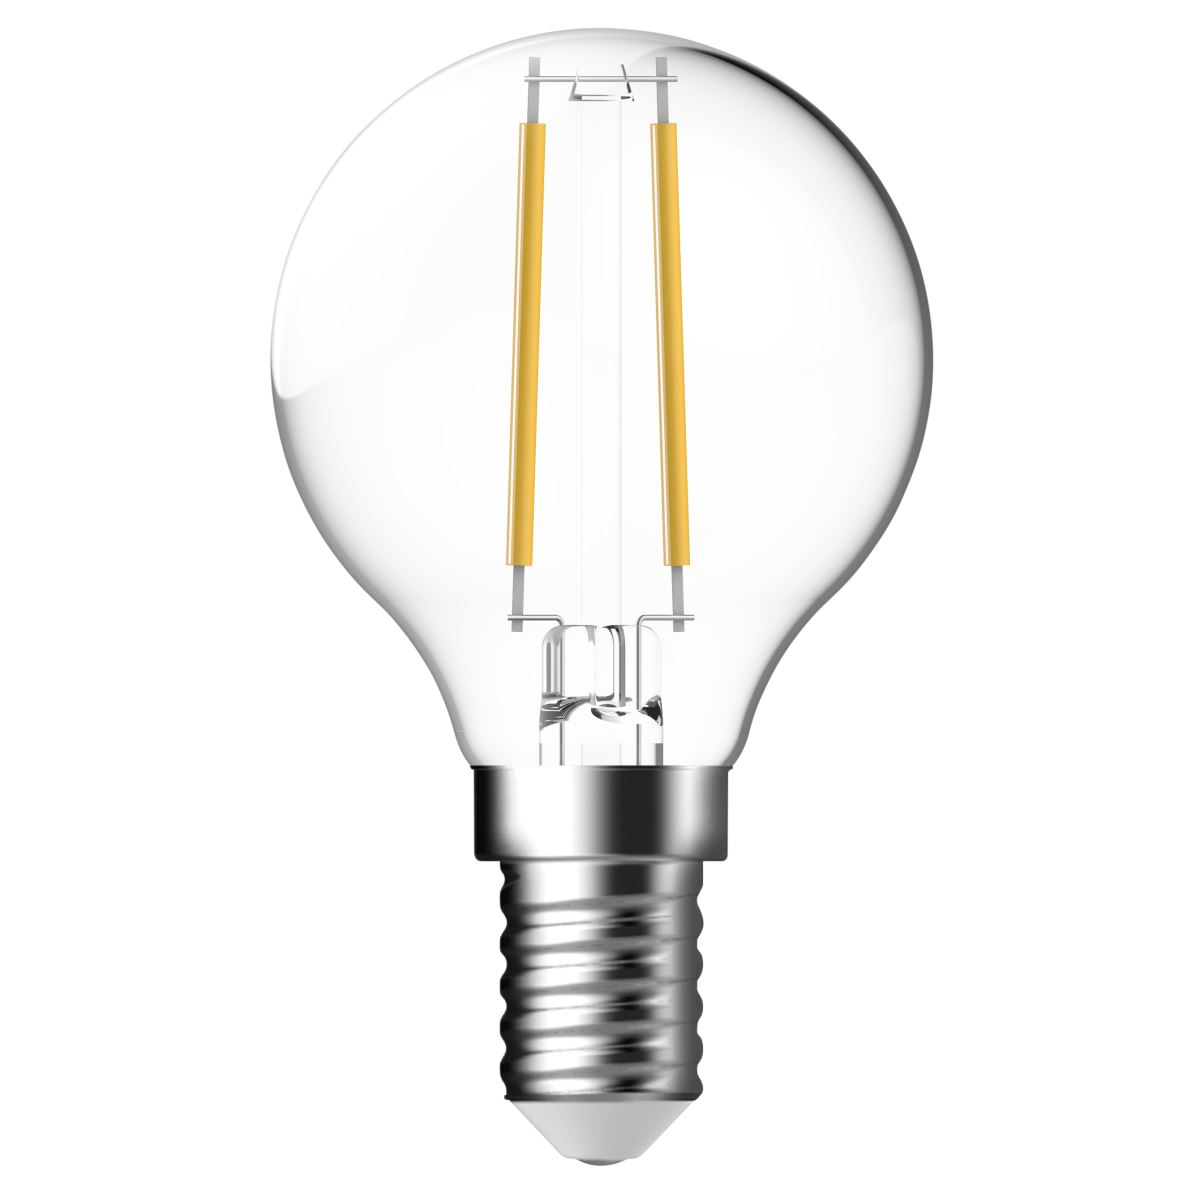 Nordlux Energetic LED Leuchtmittel E14 G45 Filament klar 470lm 4000K 4W 80Ra 360° 4,5x4,5x7,9cm von Energetic